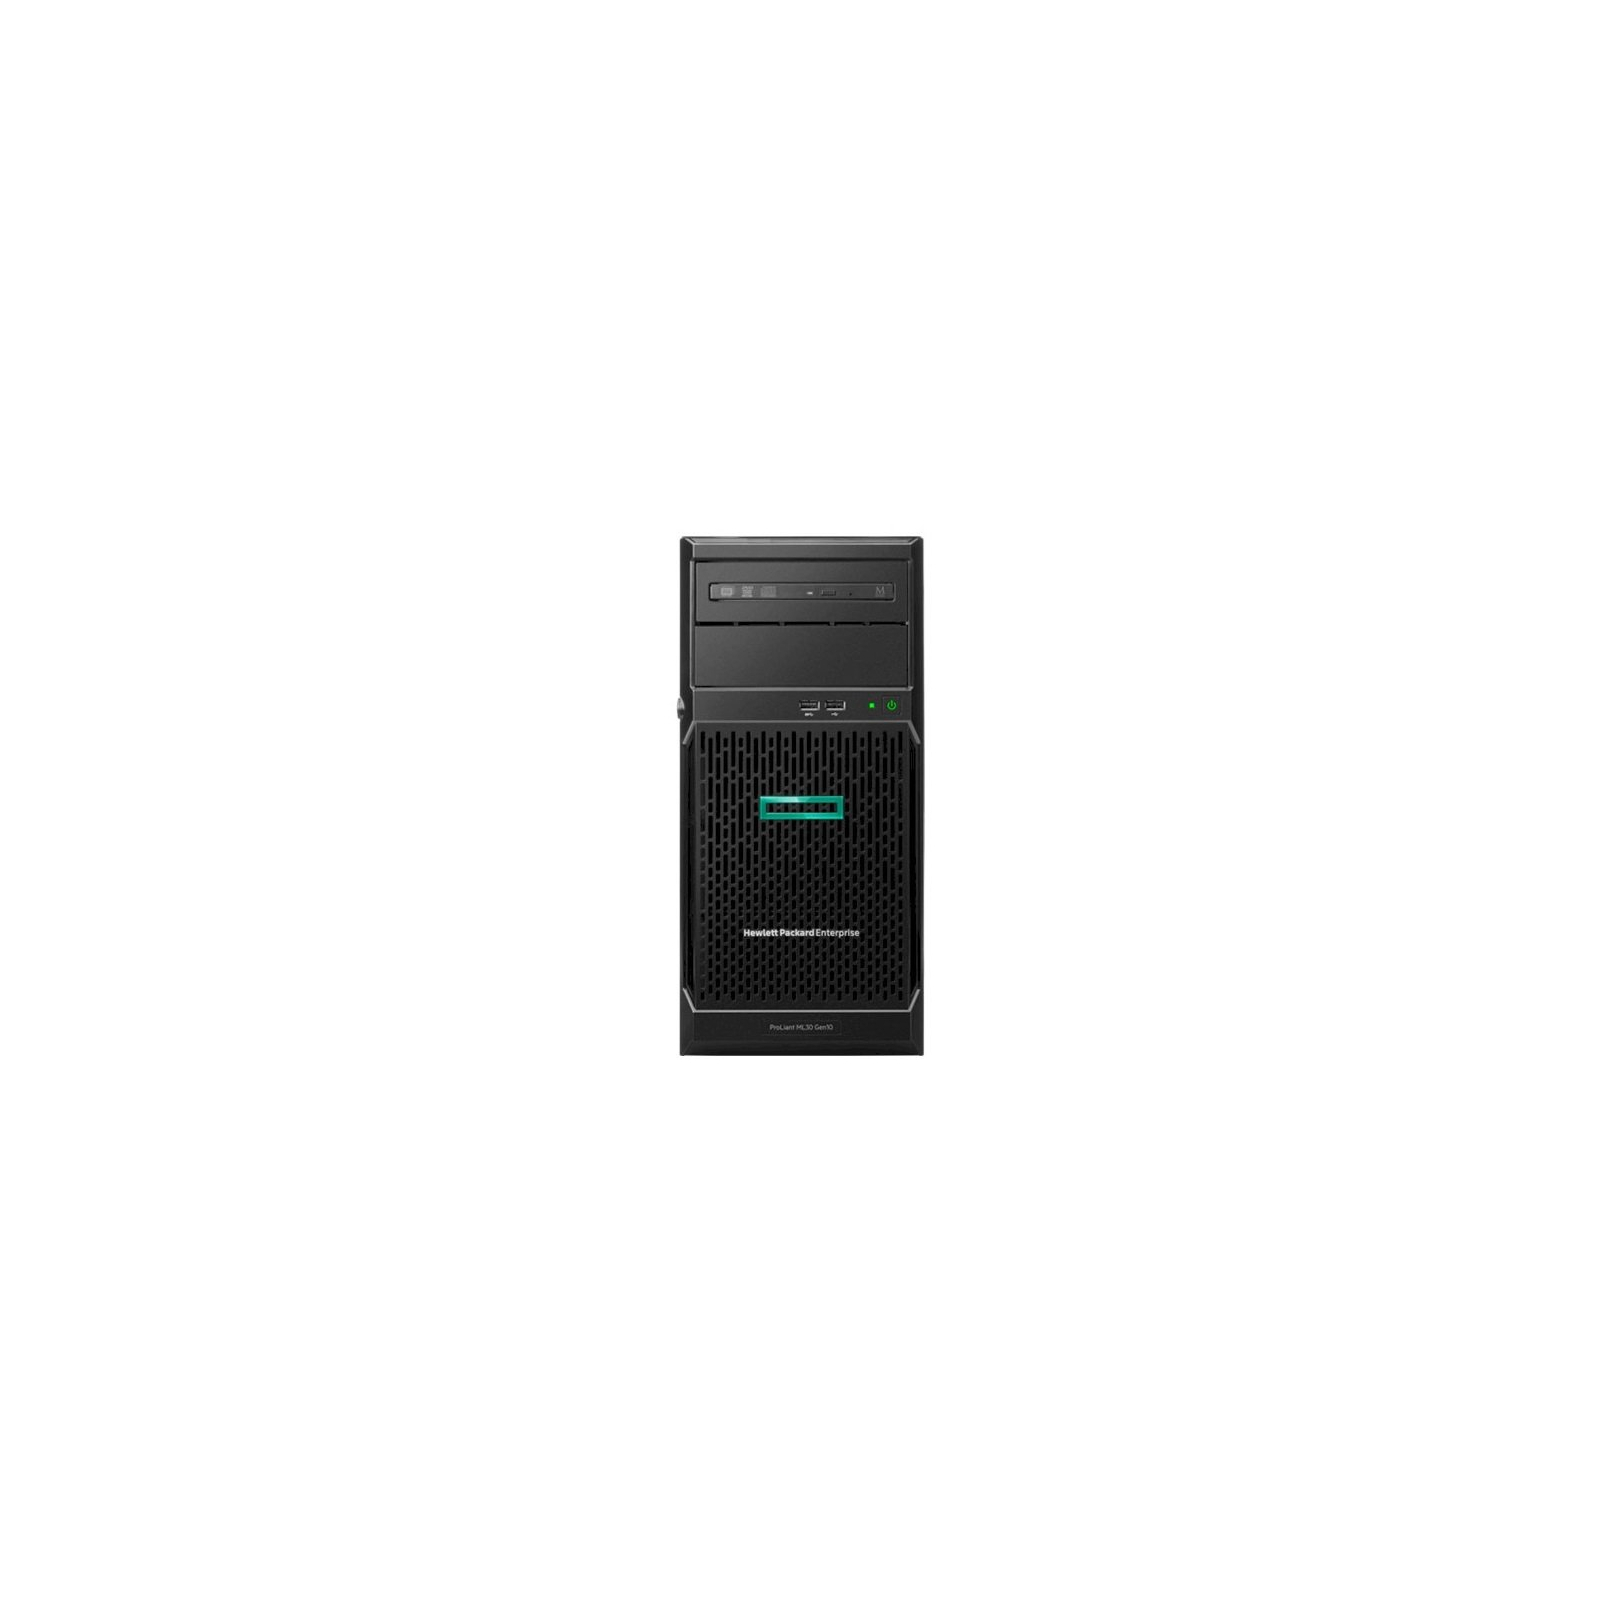 Сервер Hewlett Packard Enterprise ML30 Gen10 (P06789-425) изображение 2